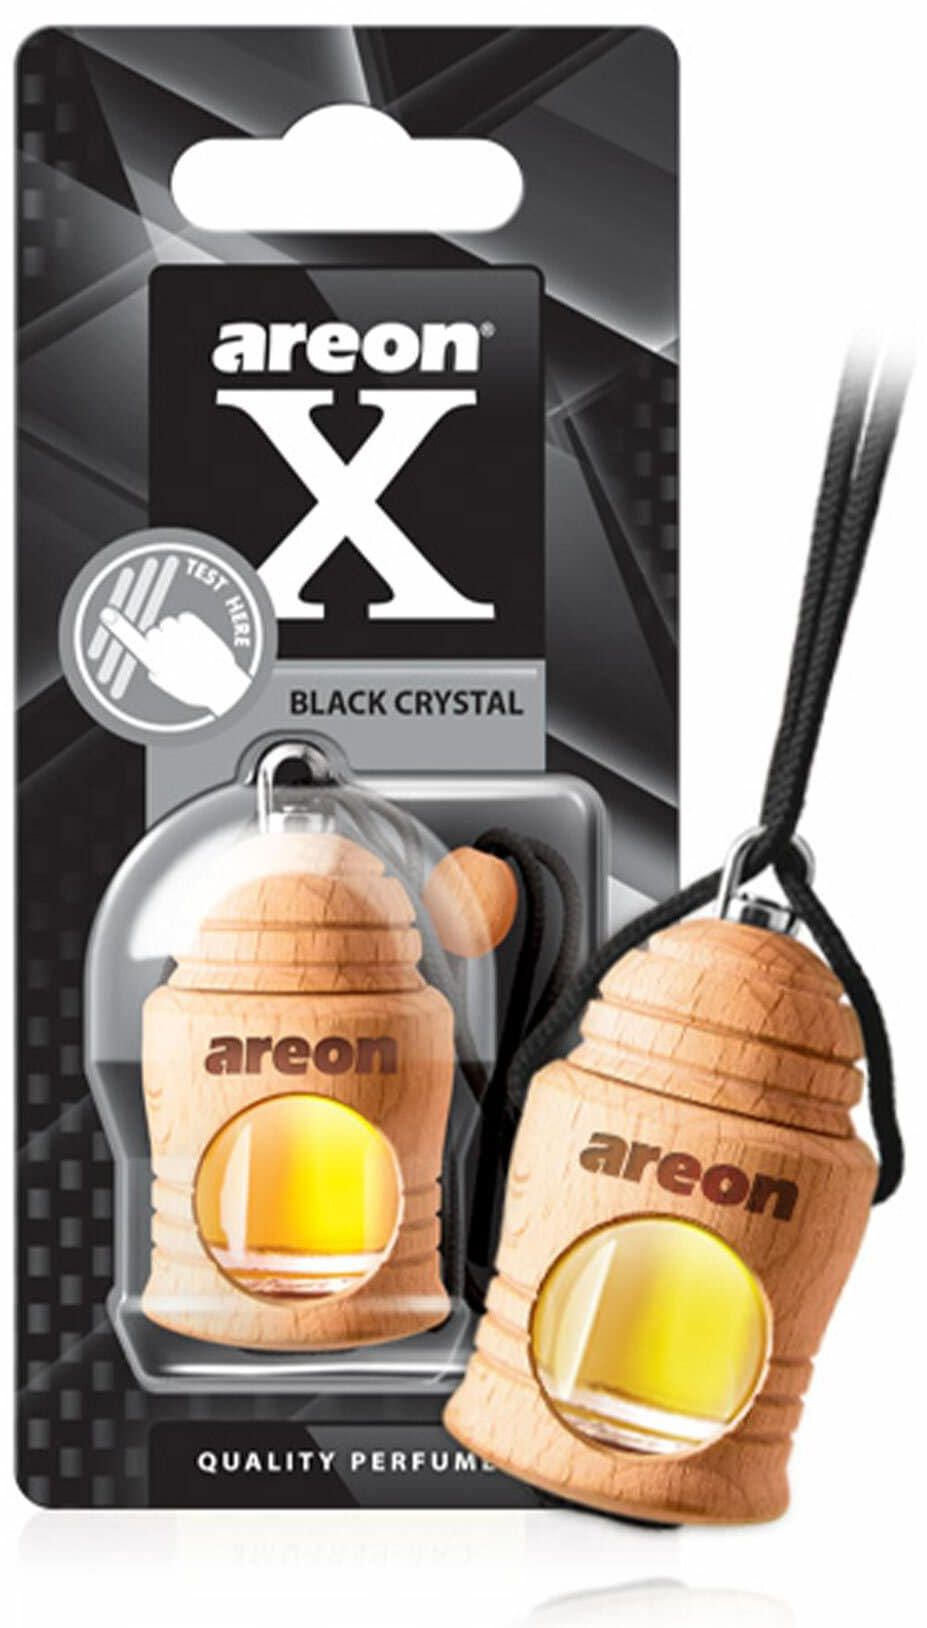 Areon x car freshener - black crystal